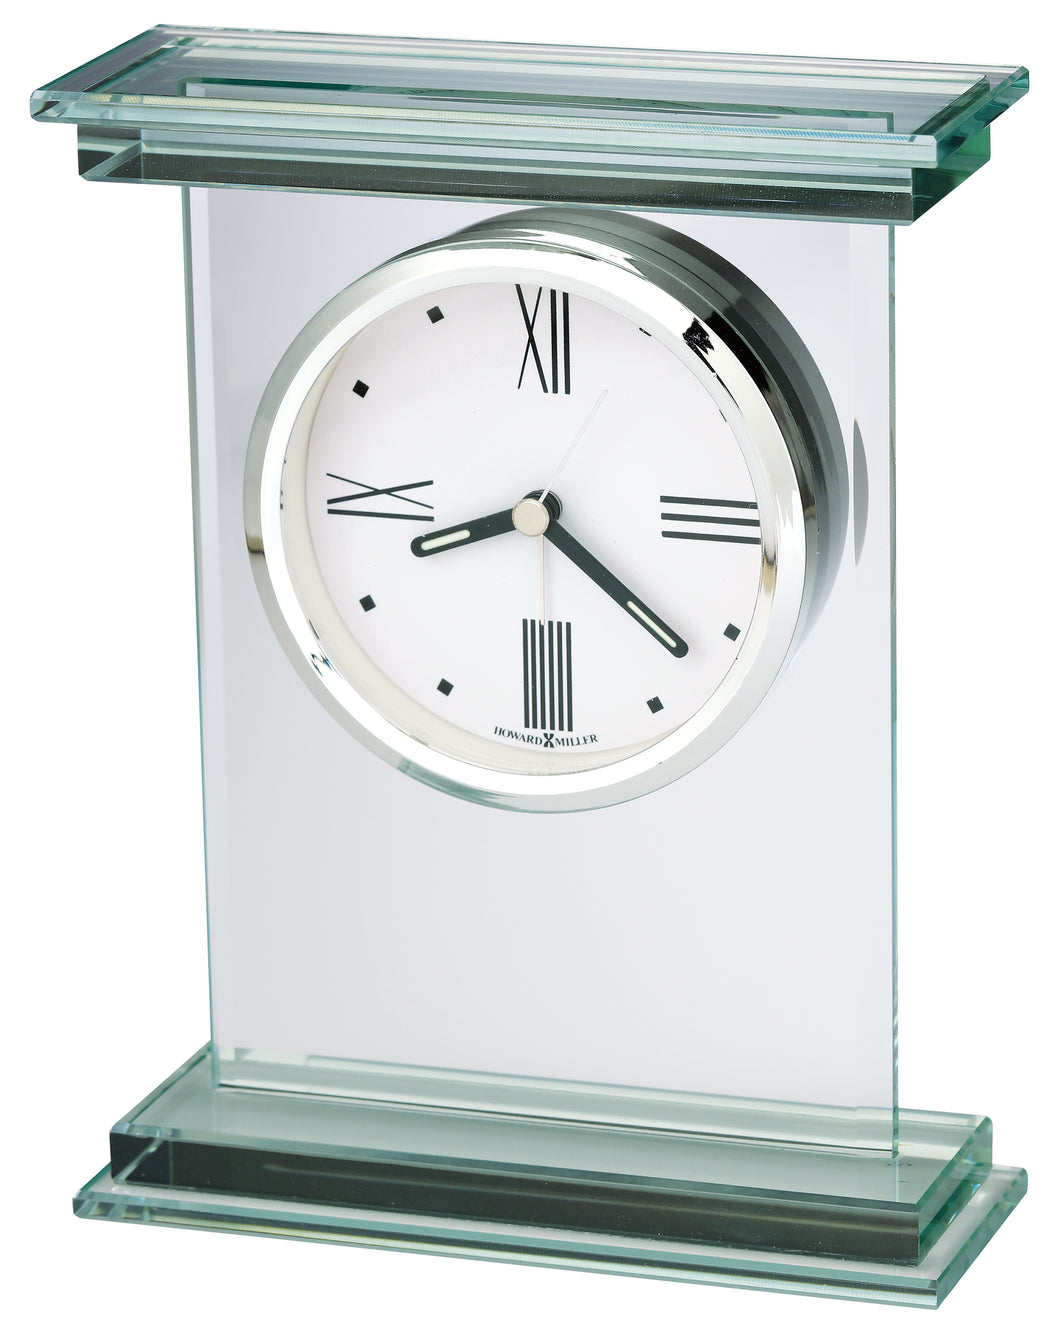 Hightower Tabletop Alarm Clock